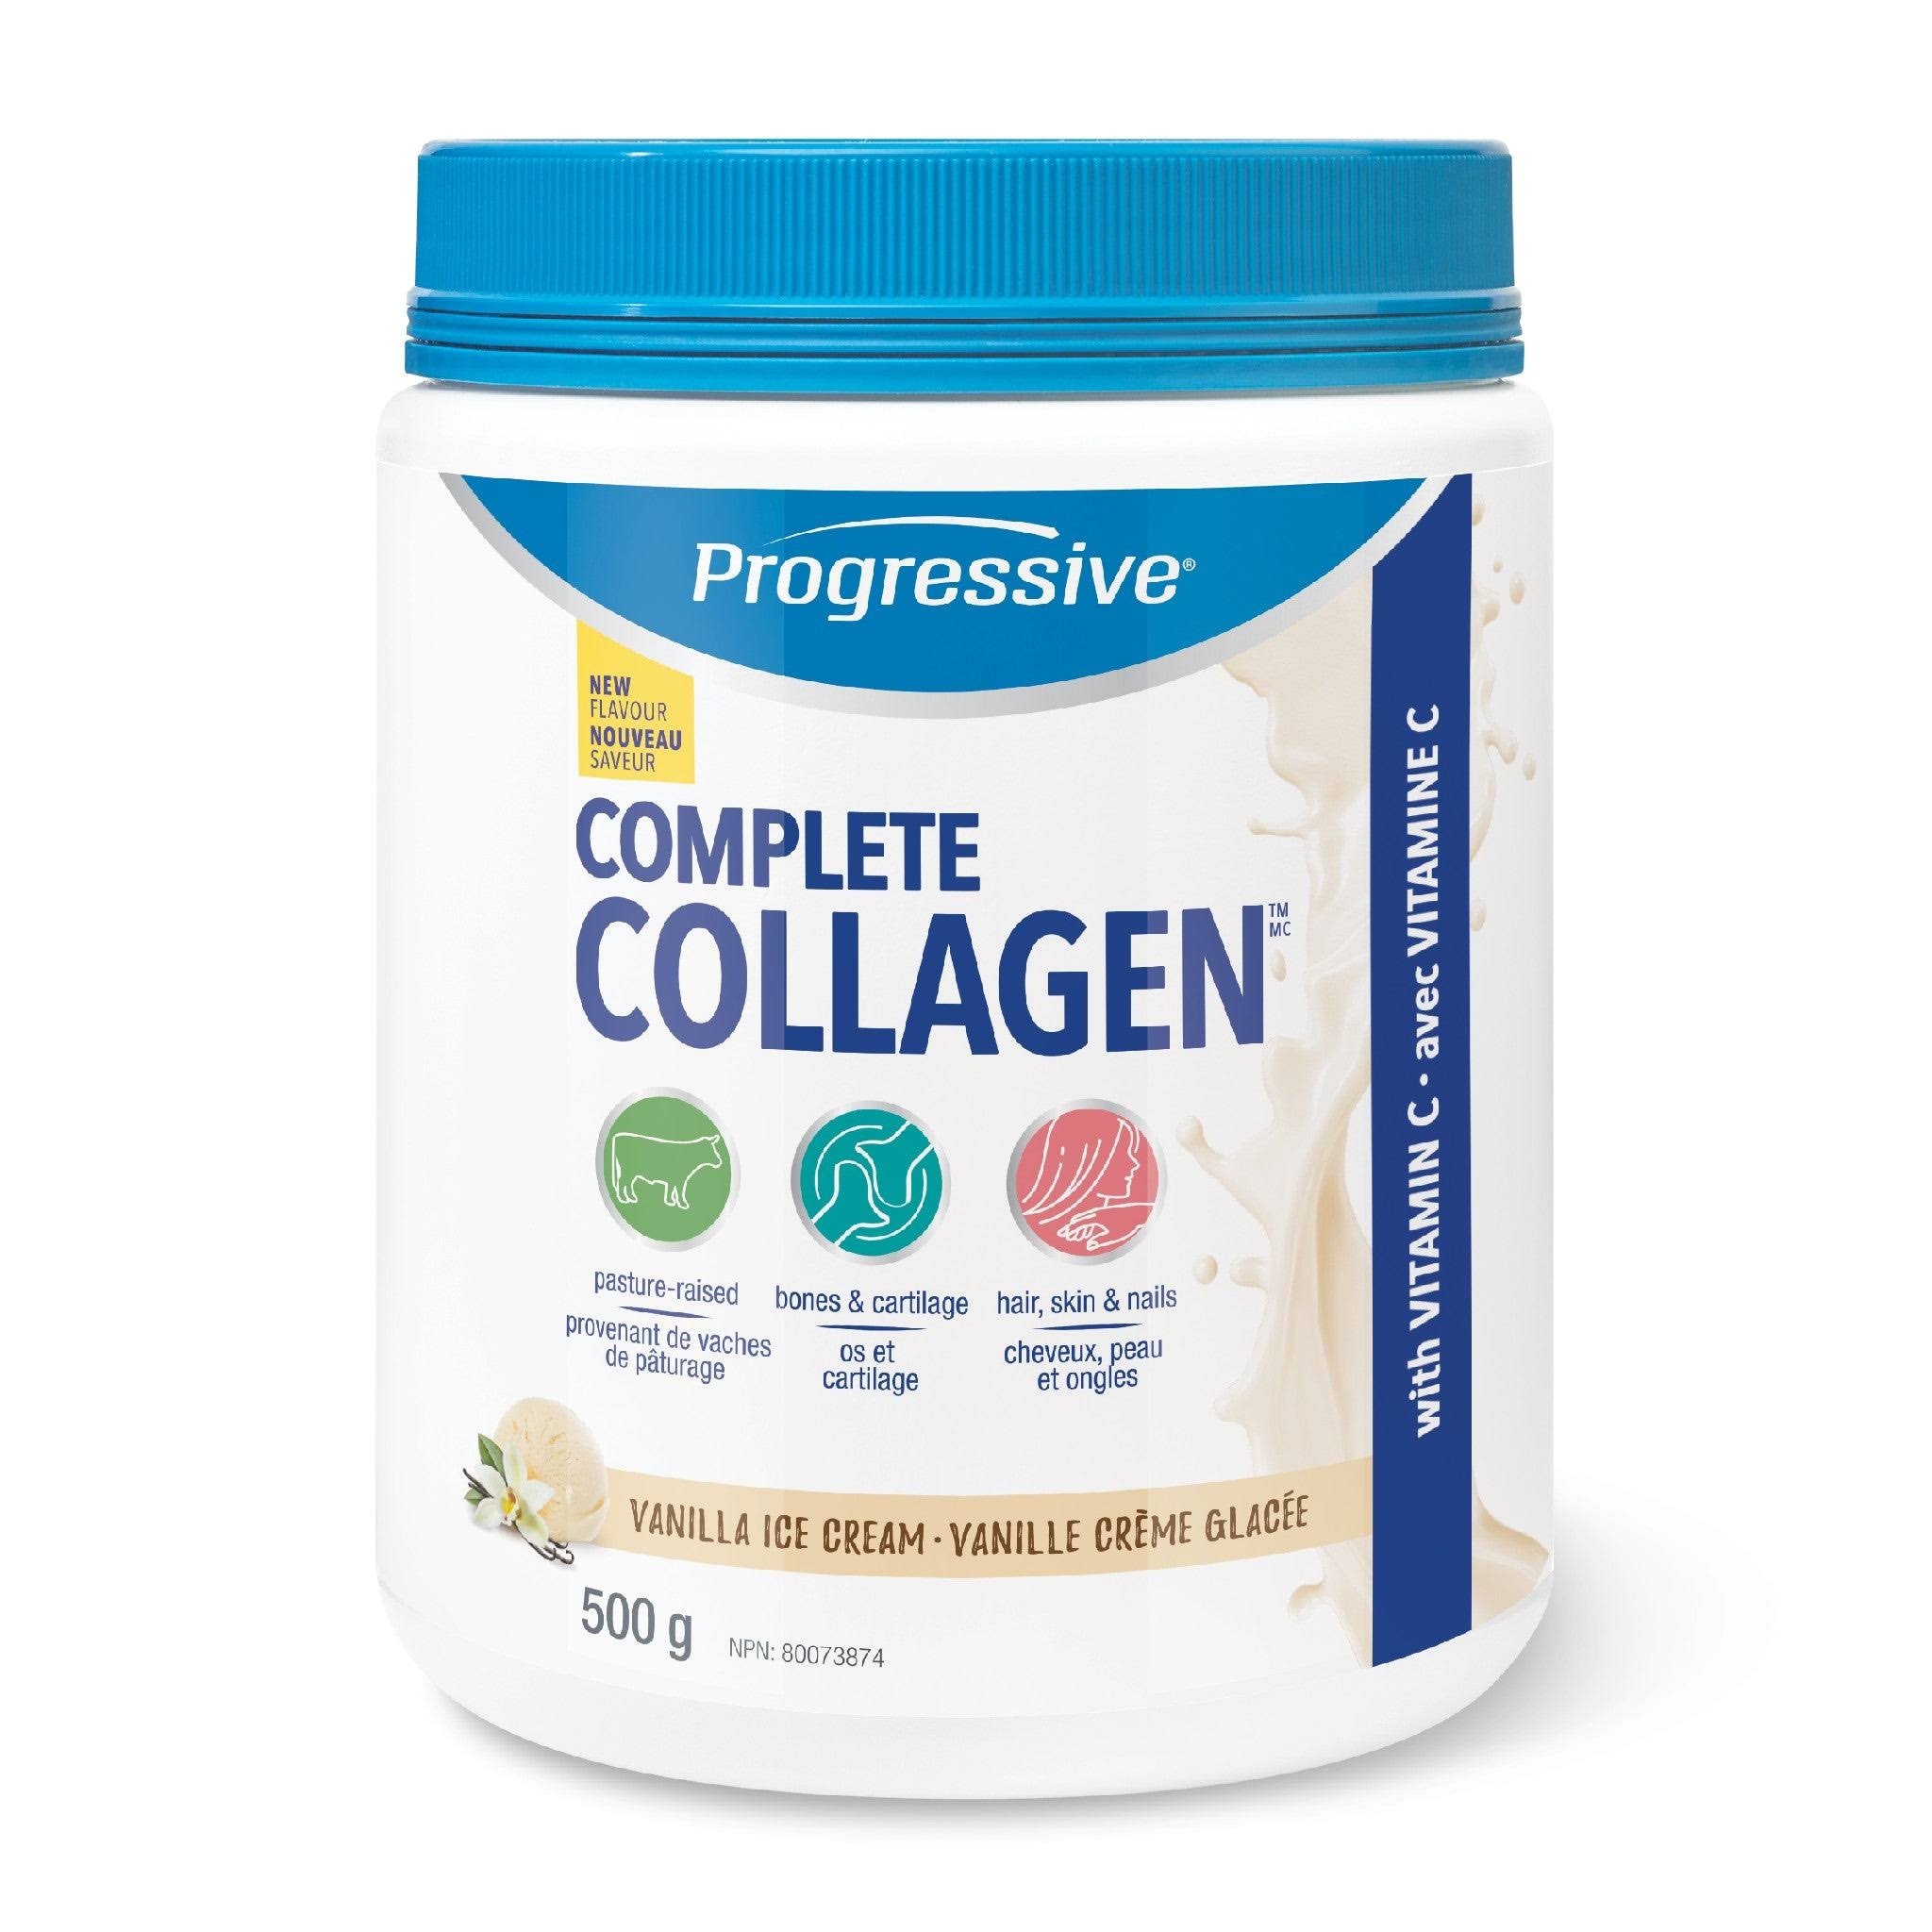 Progressive Complete Collagen 500 g / Vanilla Ice Cream